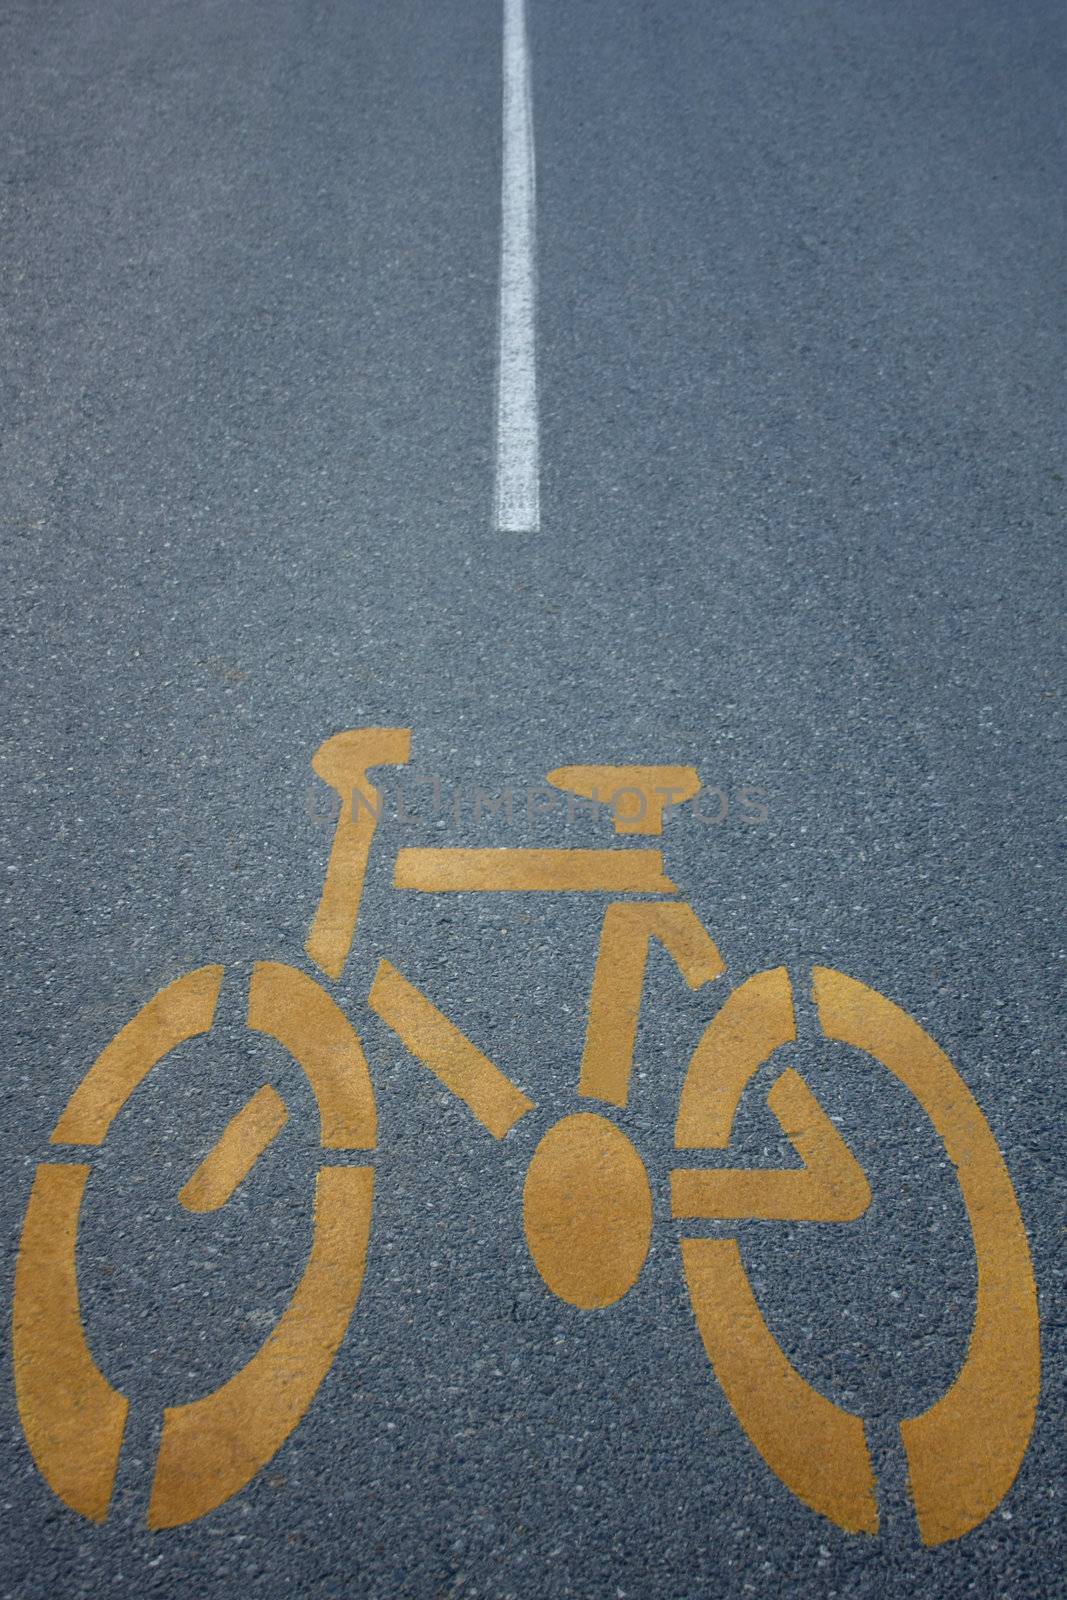 Bike Road sign by Imagecom